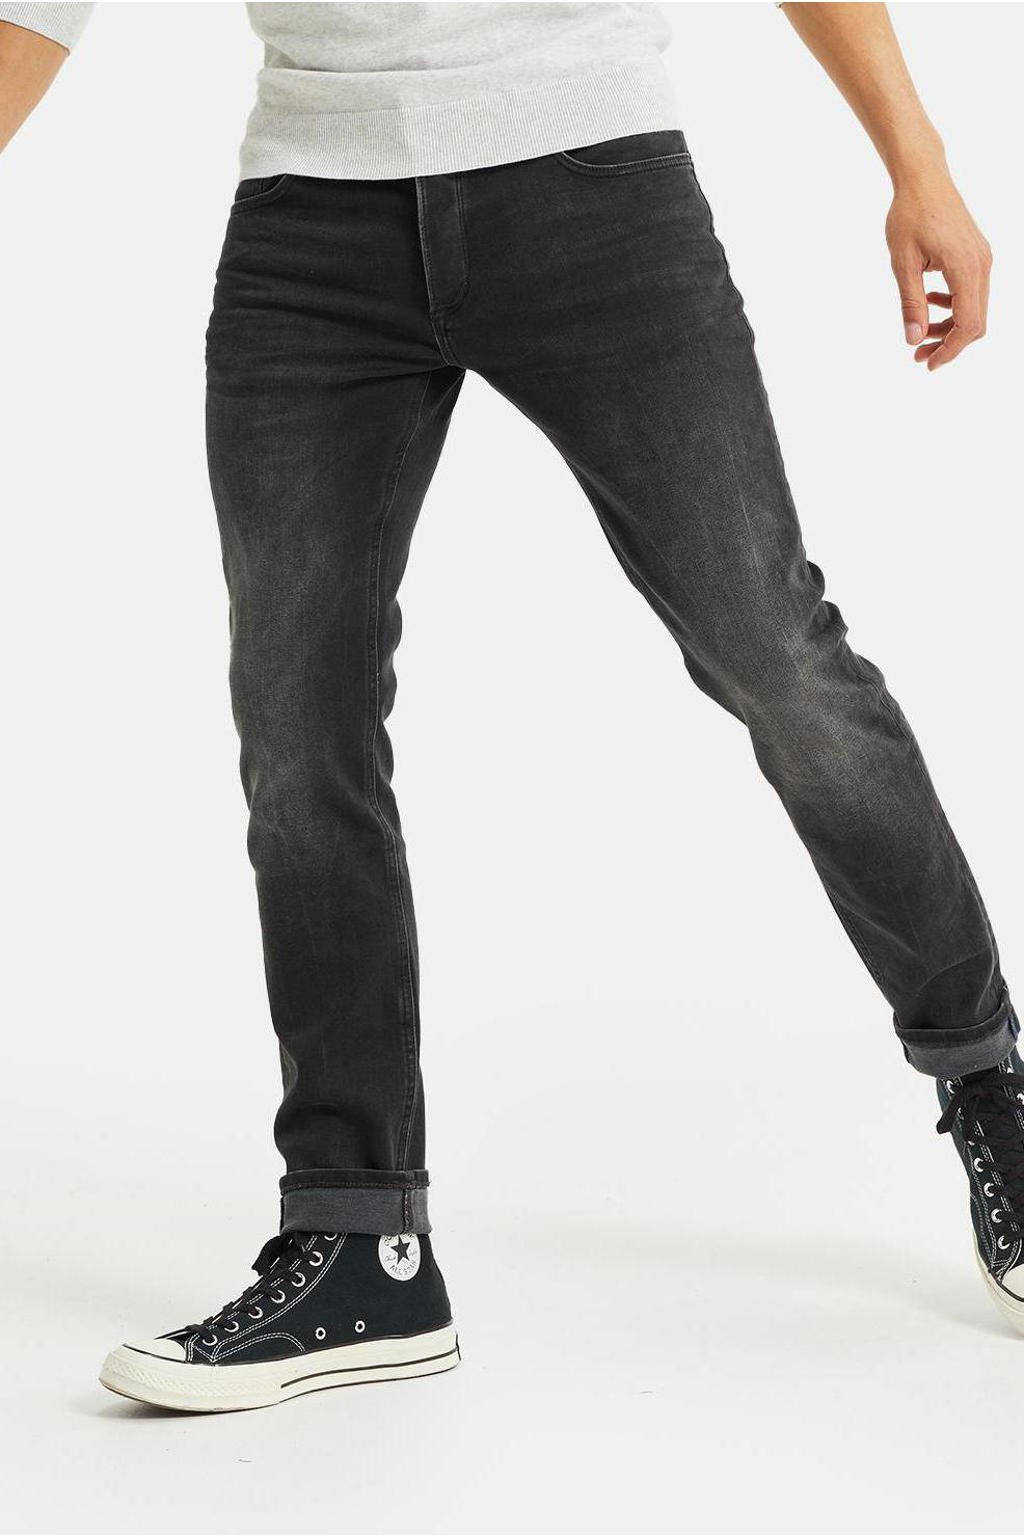 WE Fashion Blue Ridge slim fit jeans black denim